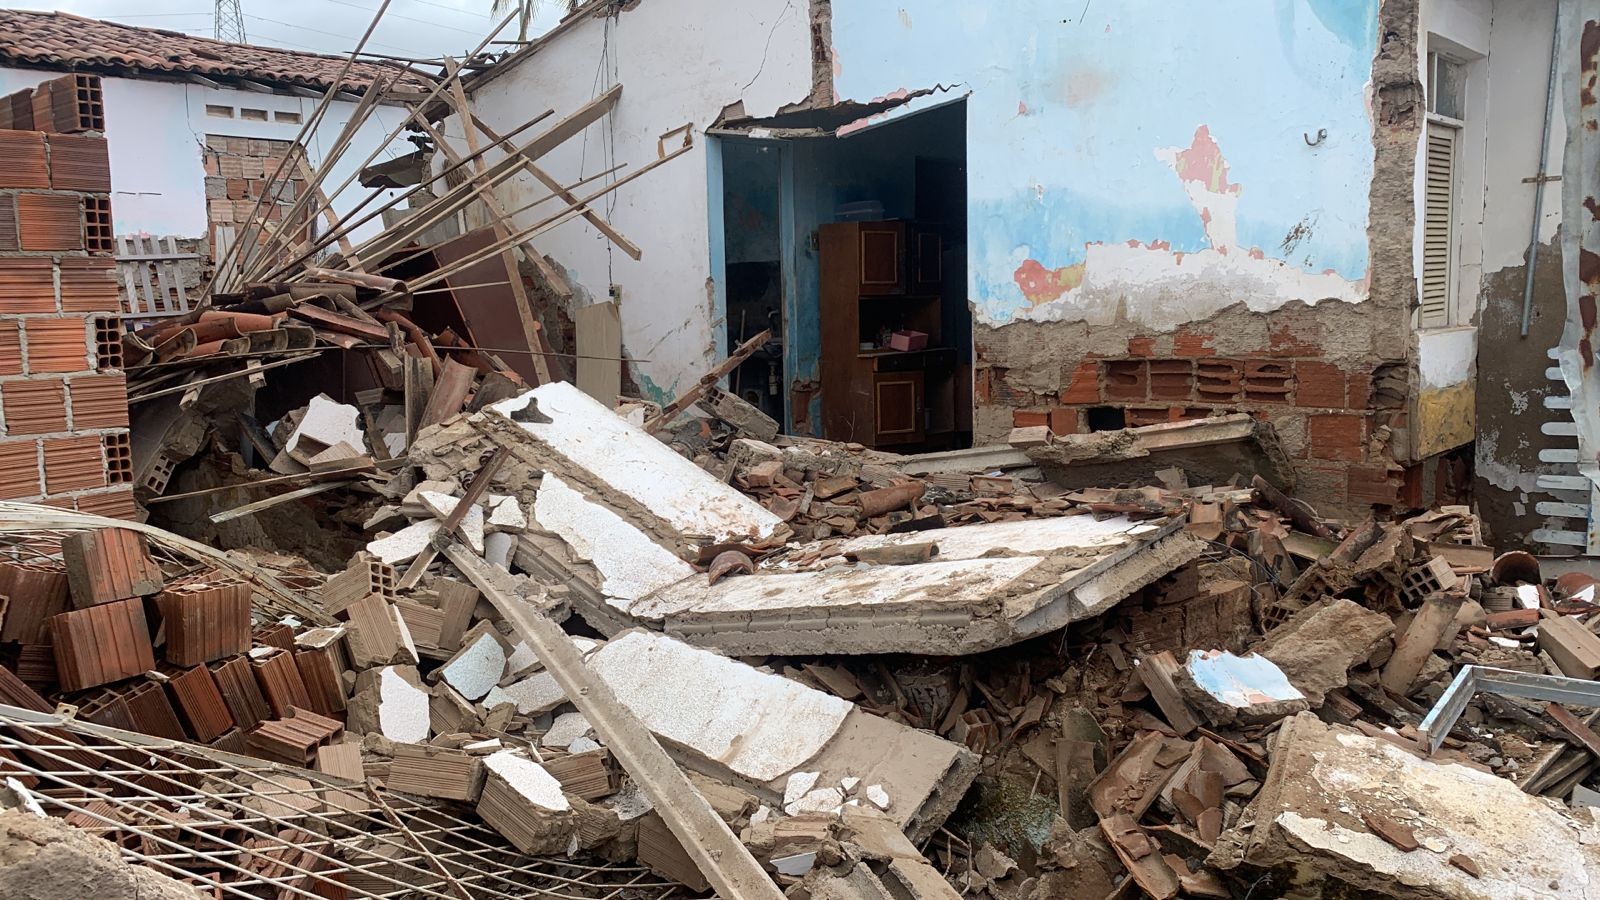 Casa desaba e idoso fica ferido embaixo dos escombros, em Campina Grande